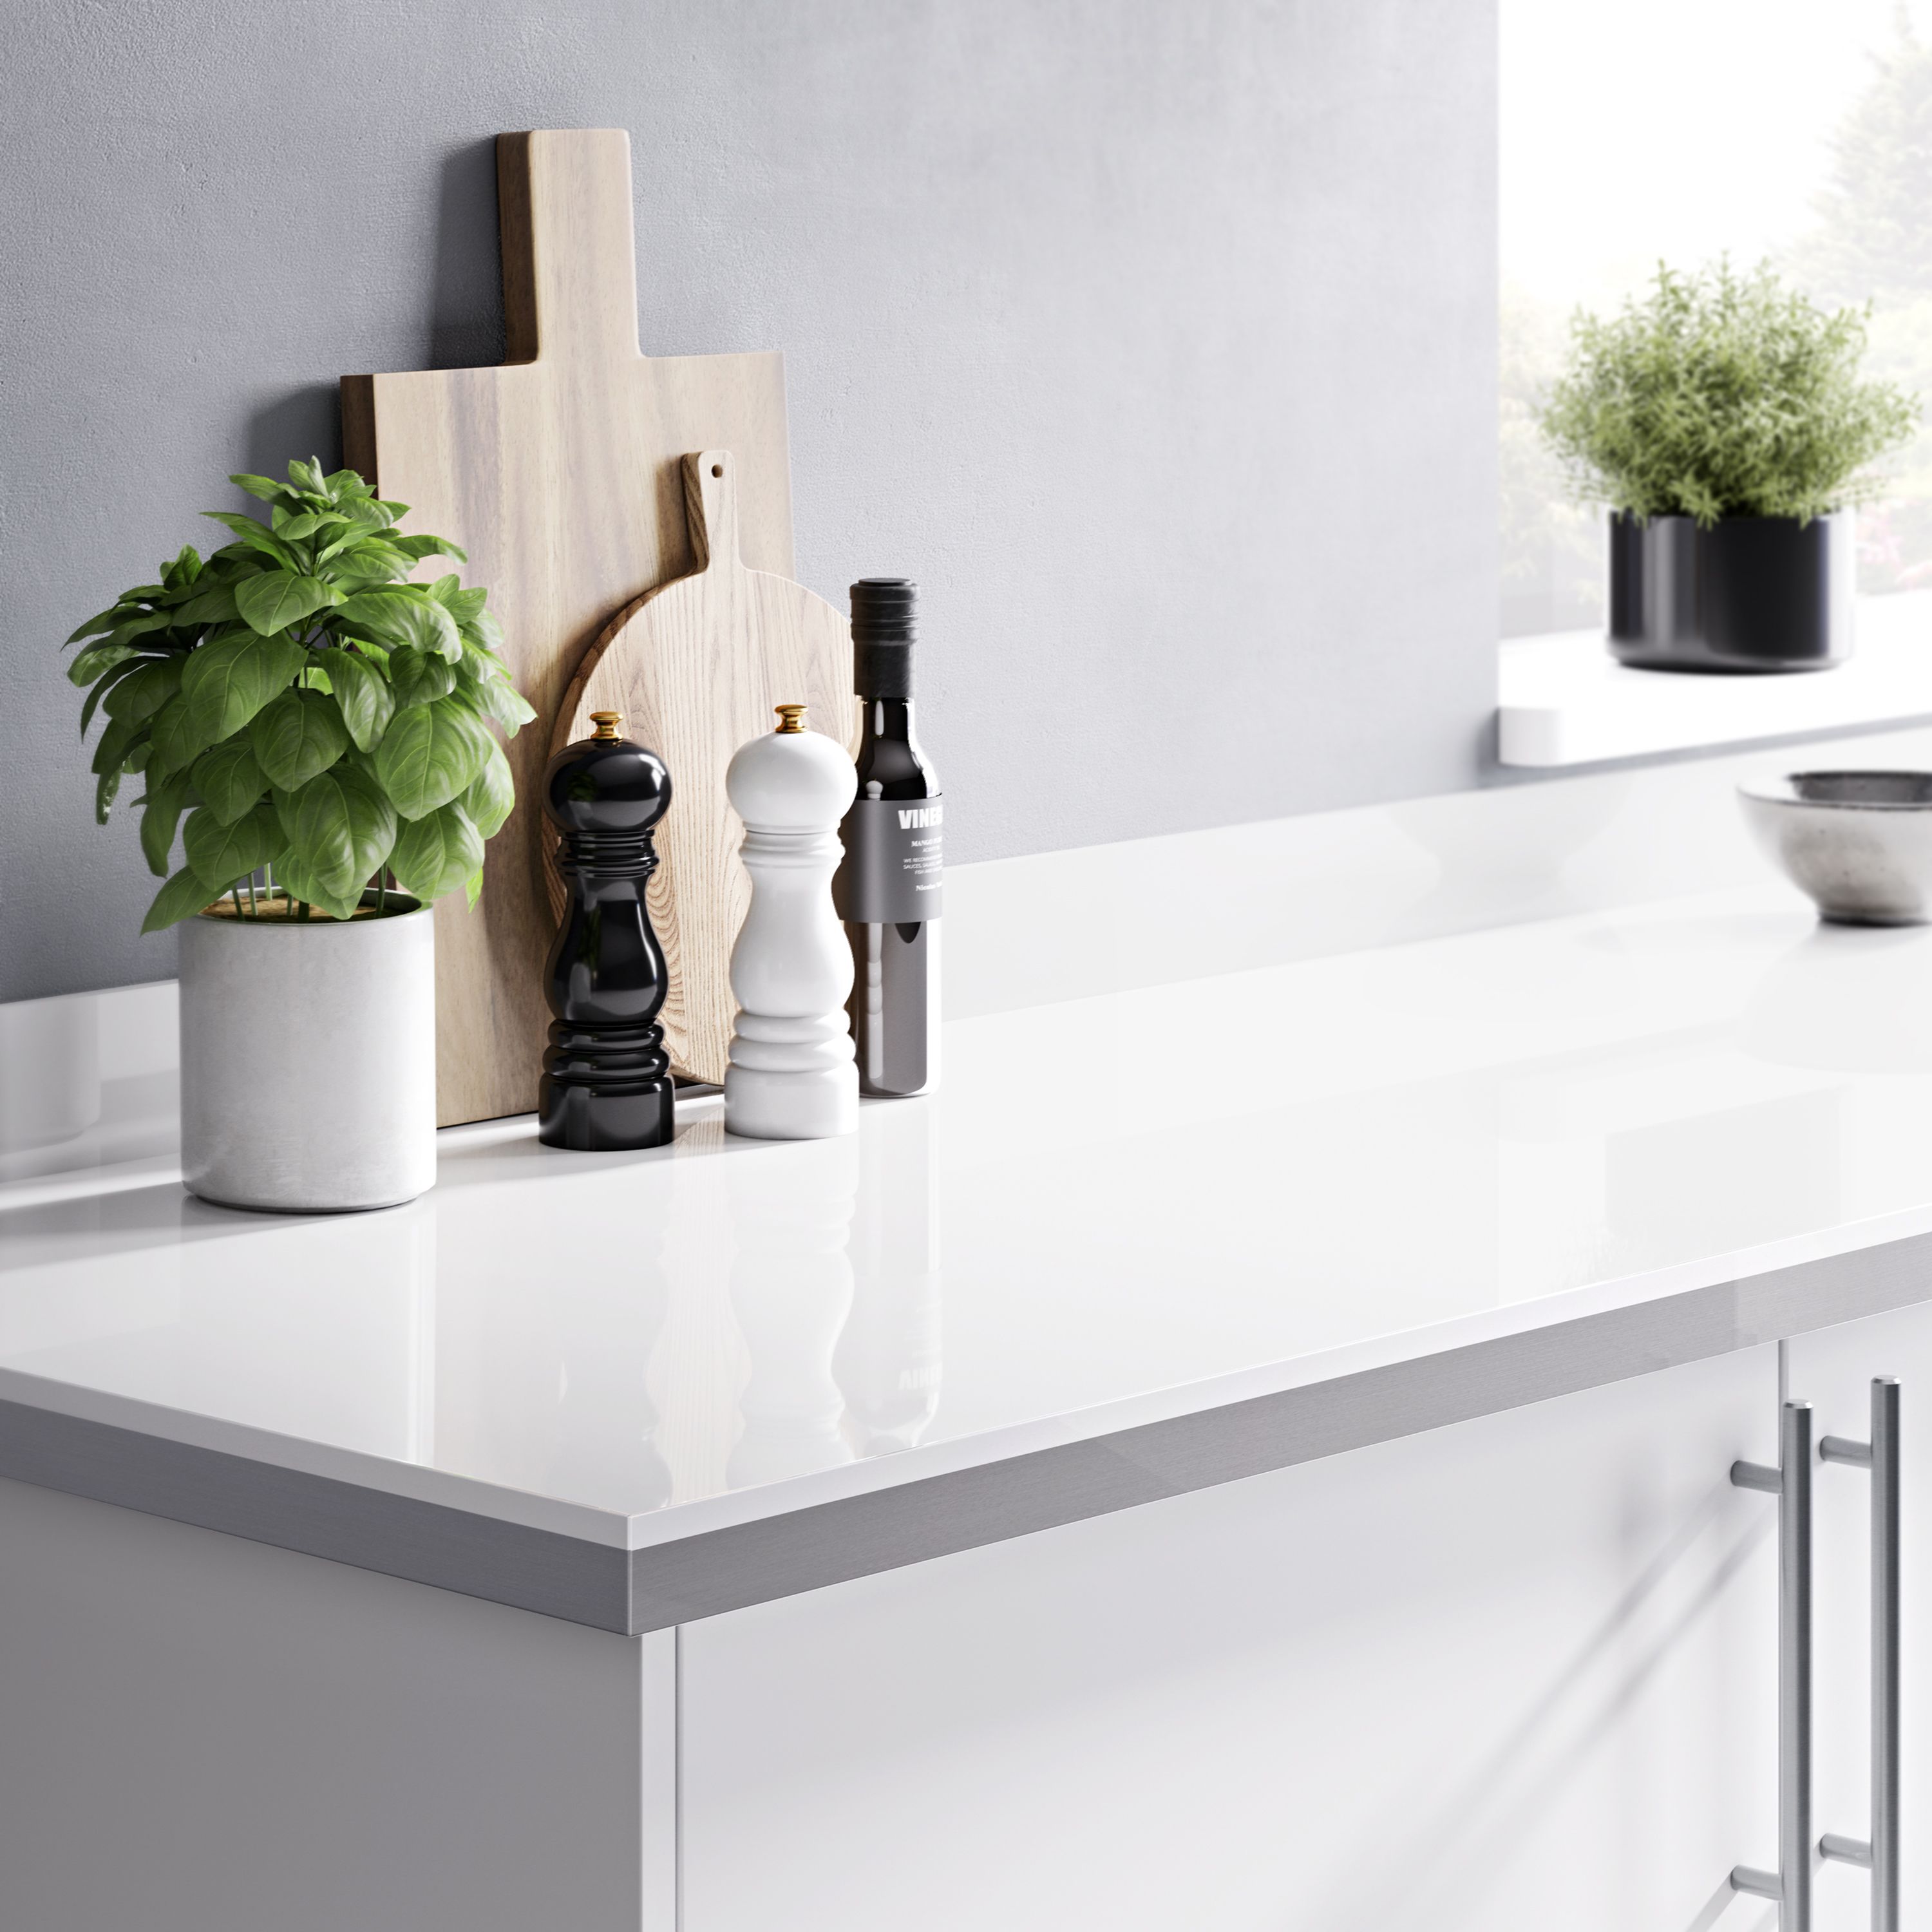 GoodHome 38mm Berberis Gloss Mirror gloss white Chipboard & laminate Square edge Kitchen Worktop, (L)3000mm